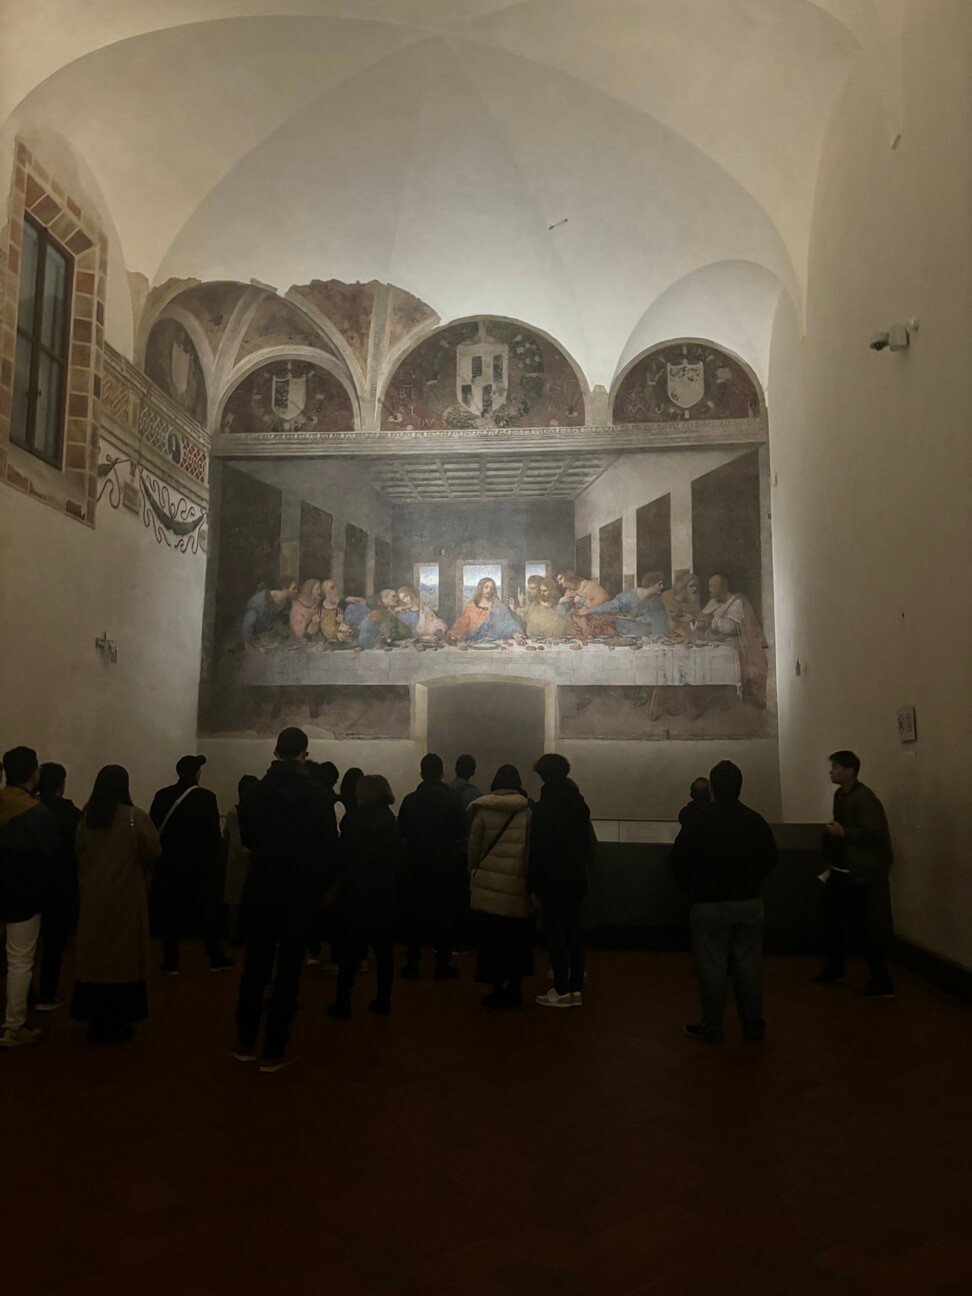 A view of the painting, The Last Supper by Leonardo da Vinci at Santa Maria delle Grazie in Milan.